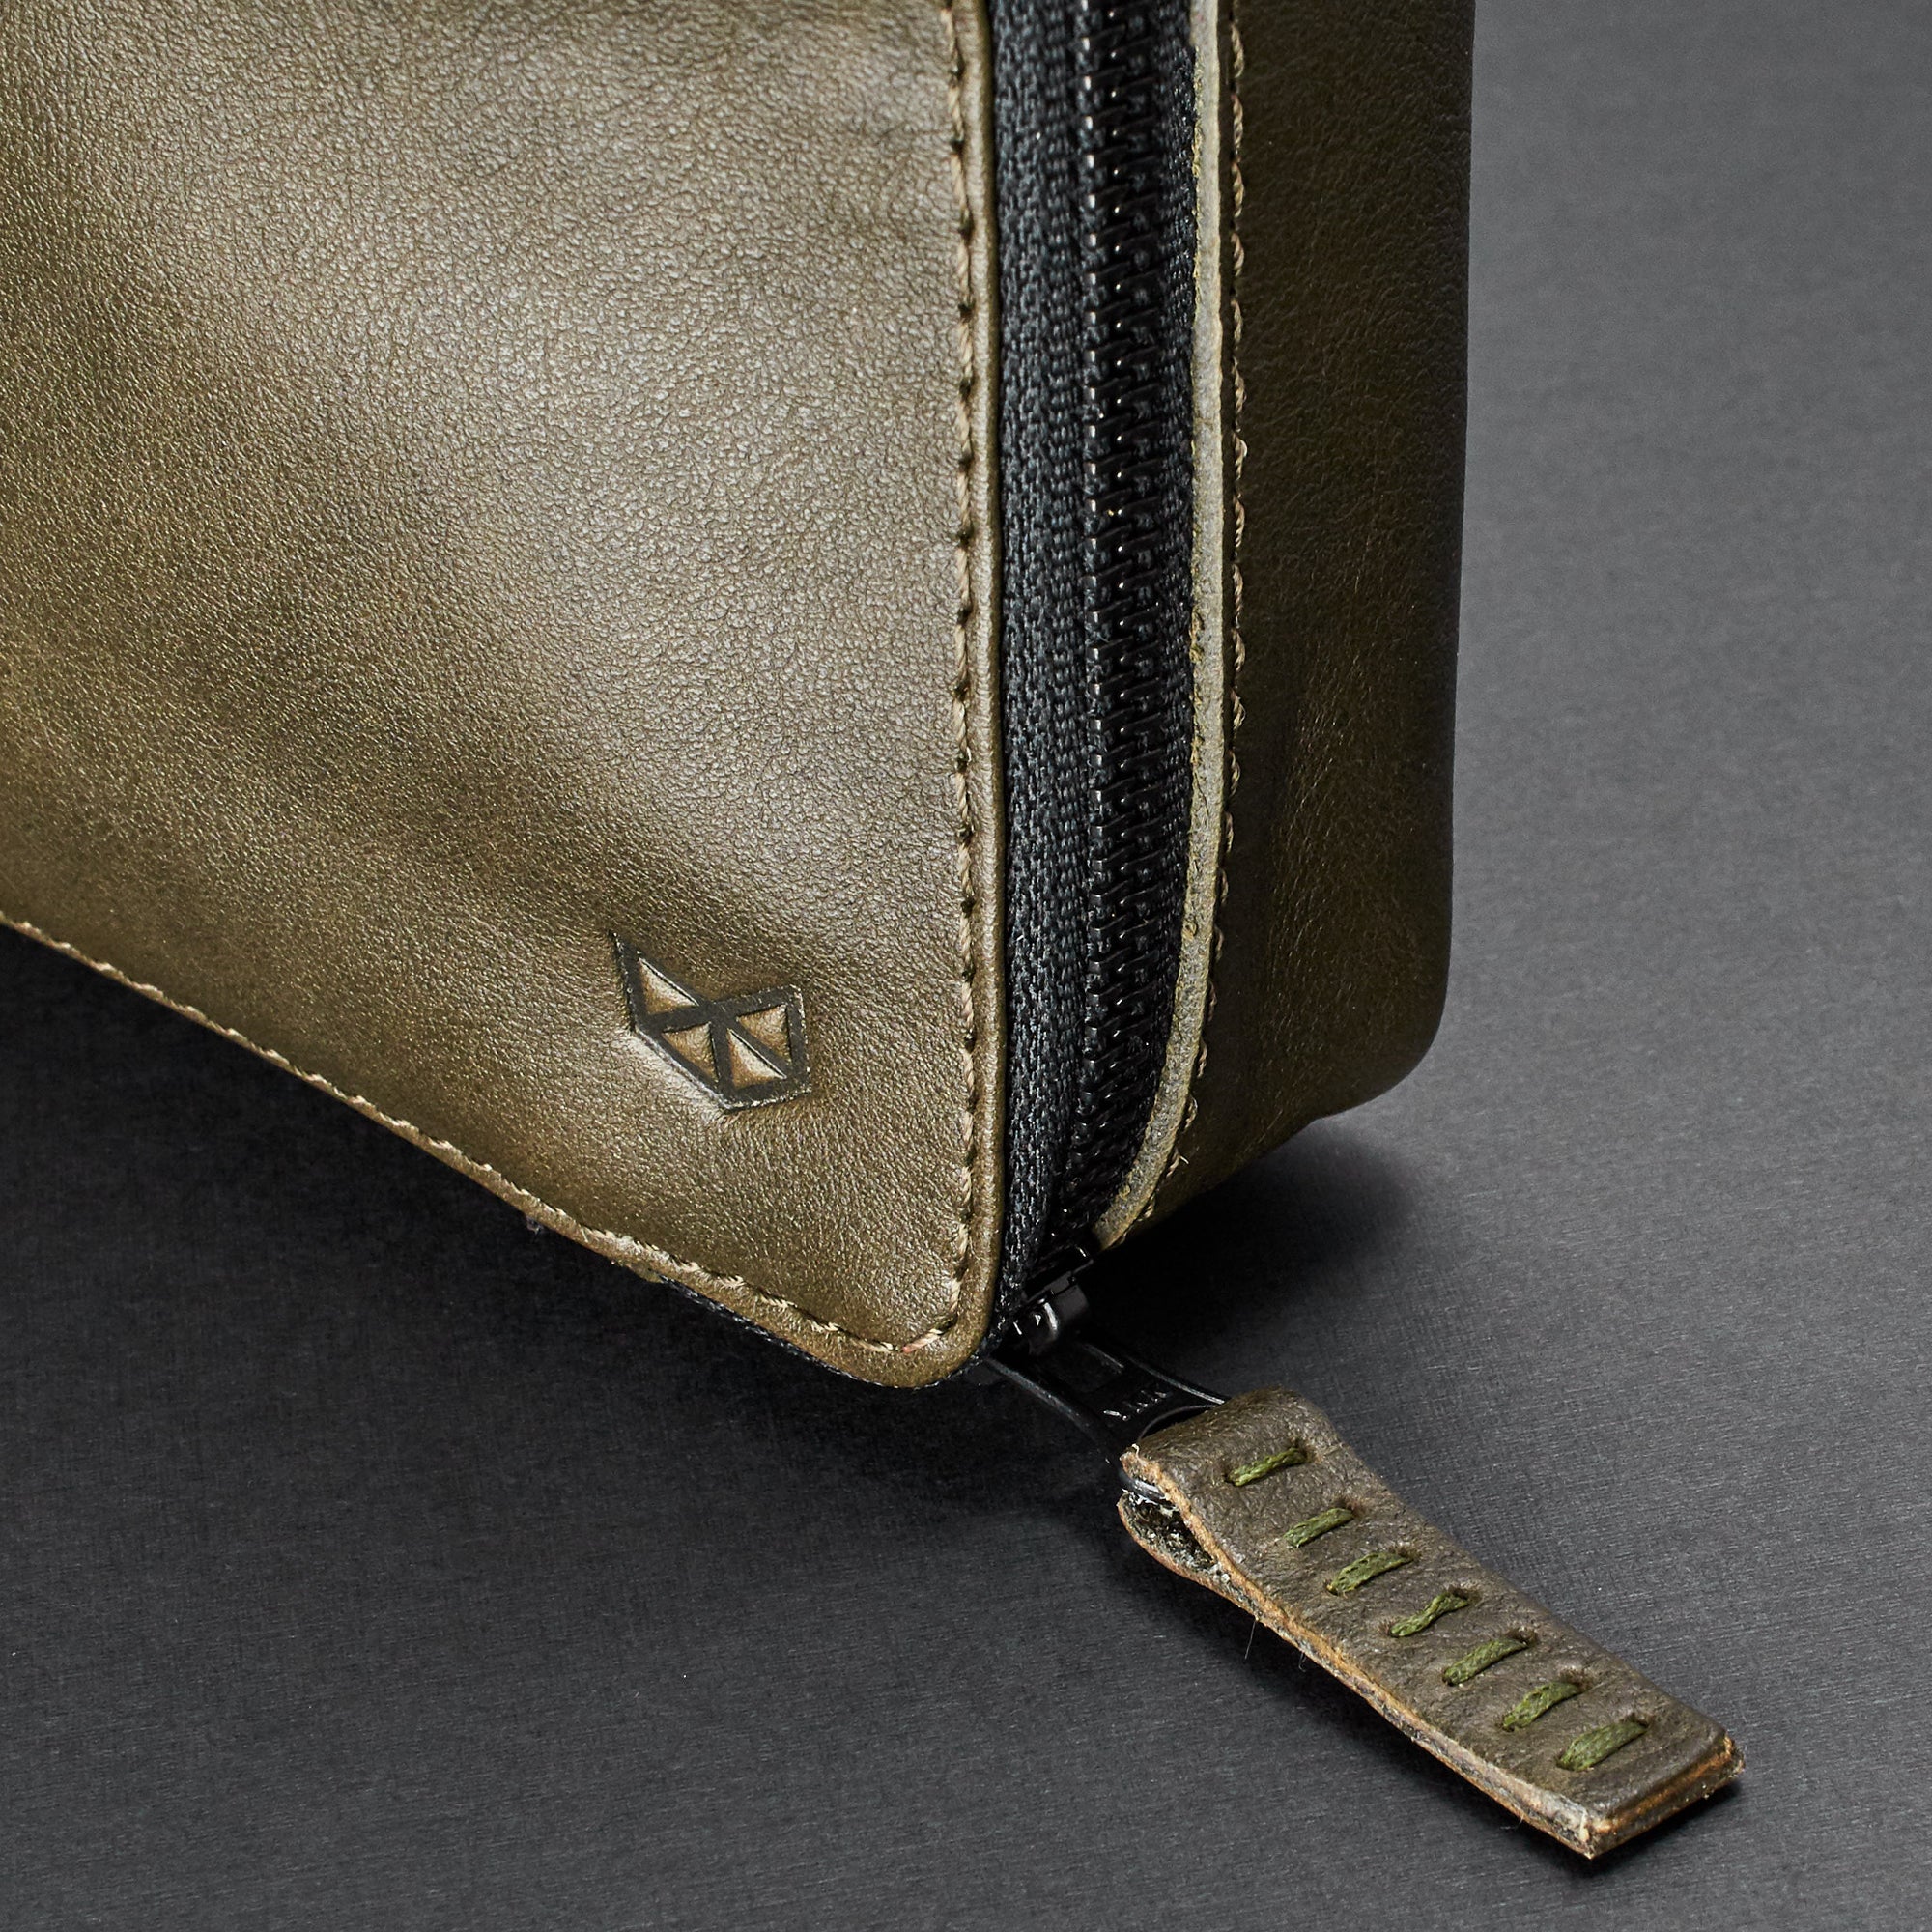 YKK metallic zippers. Green handmade gear bags by Capra Leather